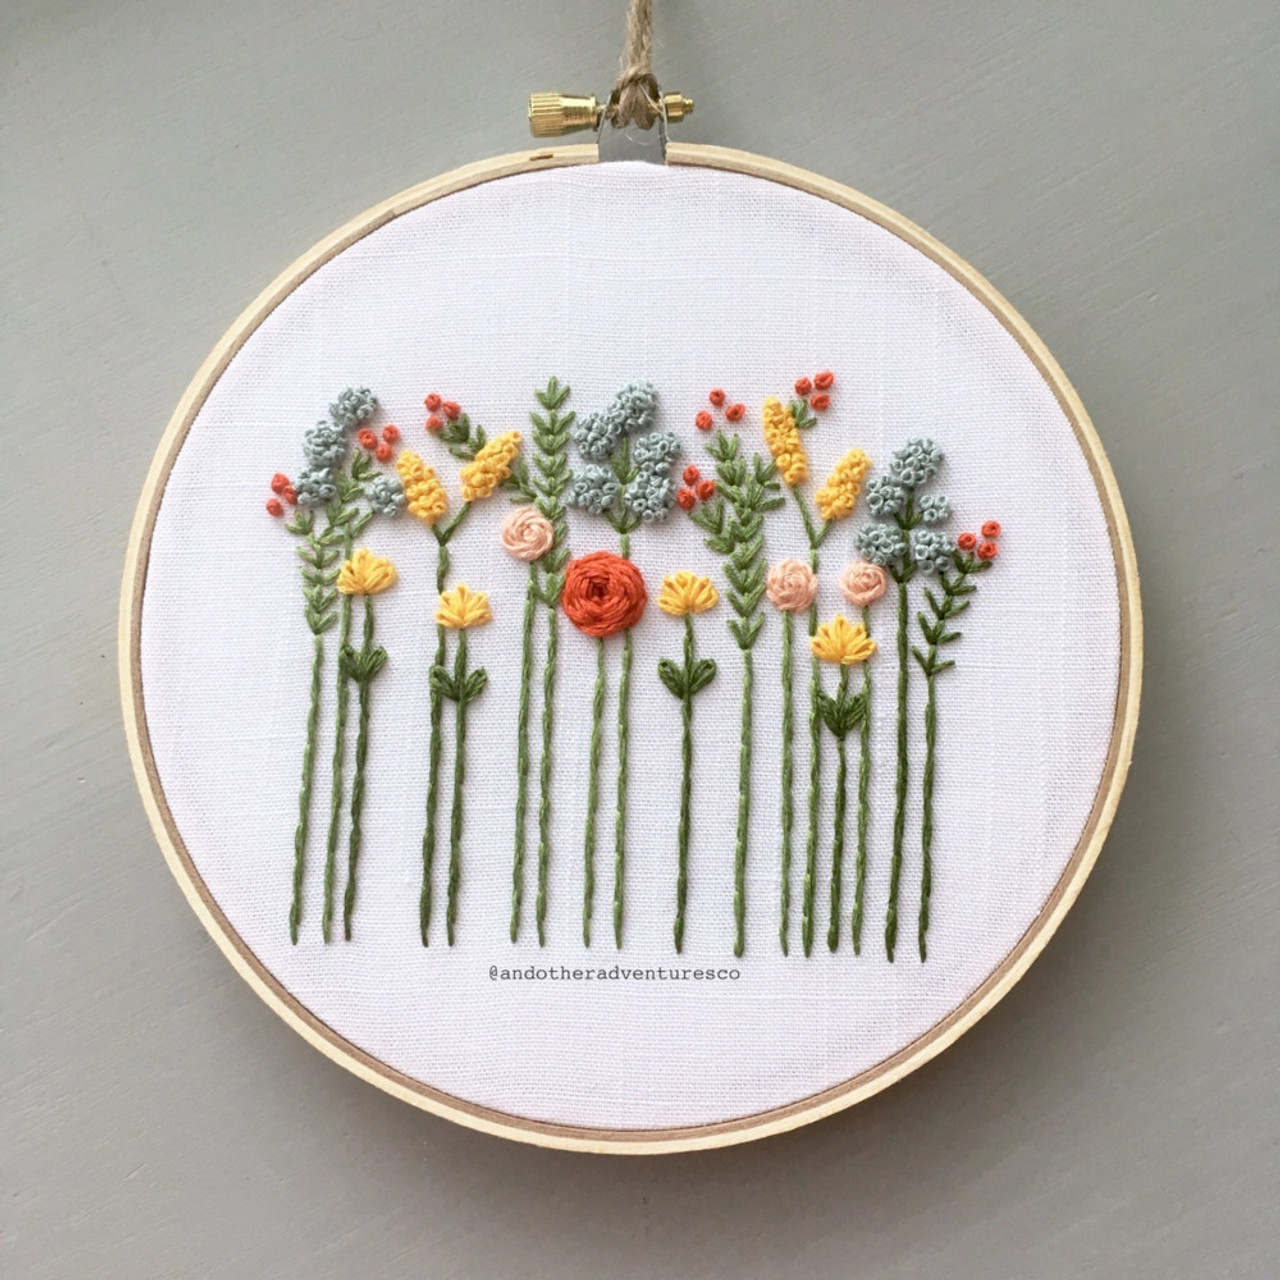 Beginner Embroidery Kit - Harvest Wildflowers - Olivia's Flower Truck